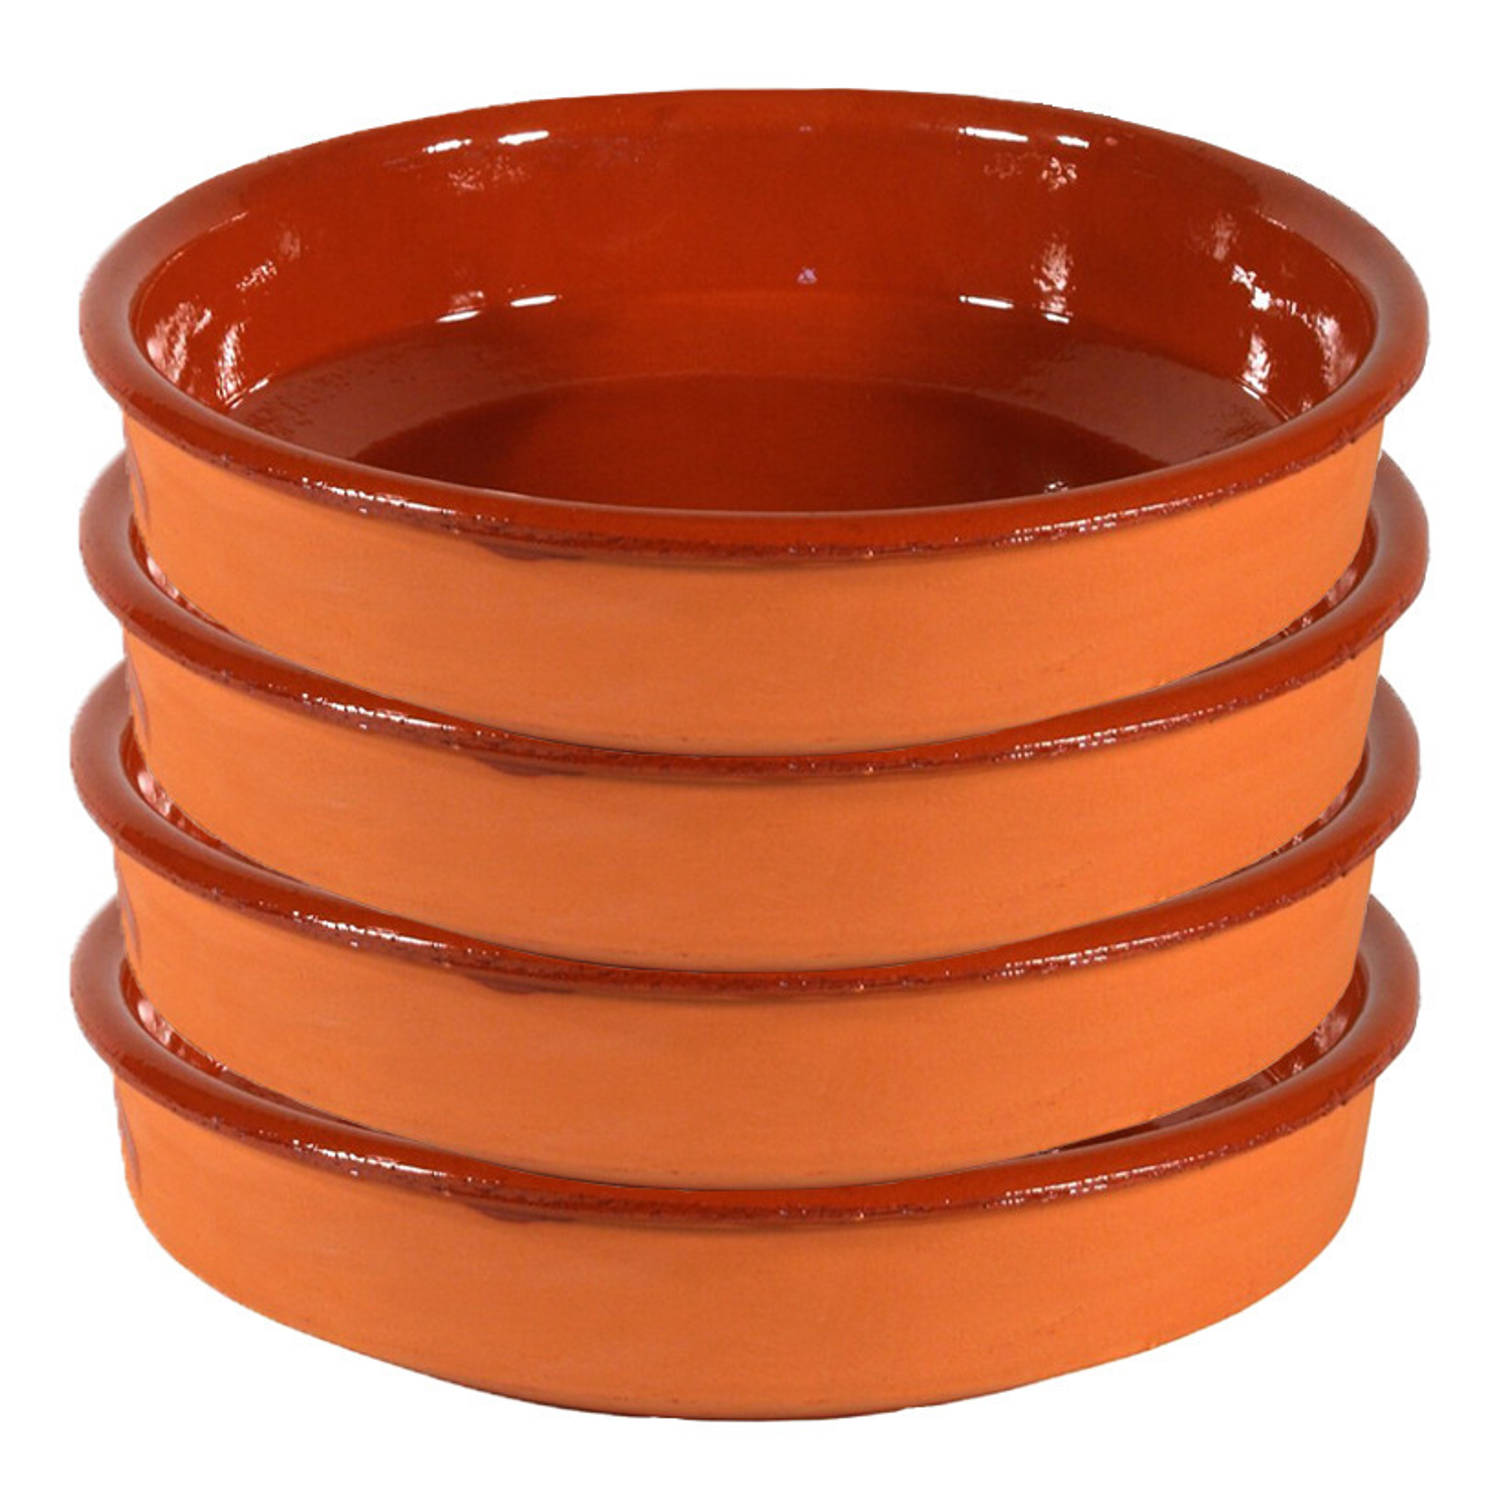 4x Terracotta tapas borden/schalen 35 cm - Snack en tapasschalen